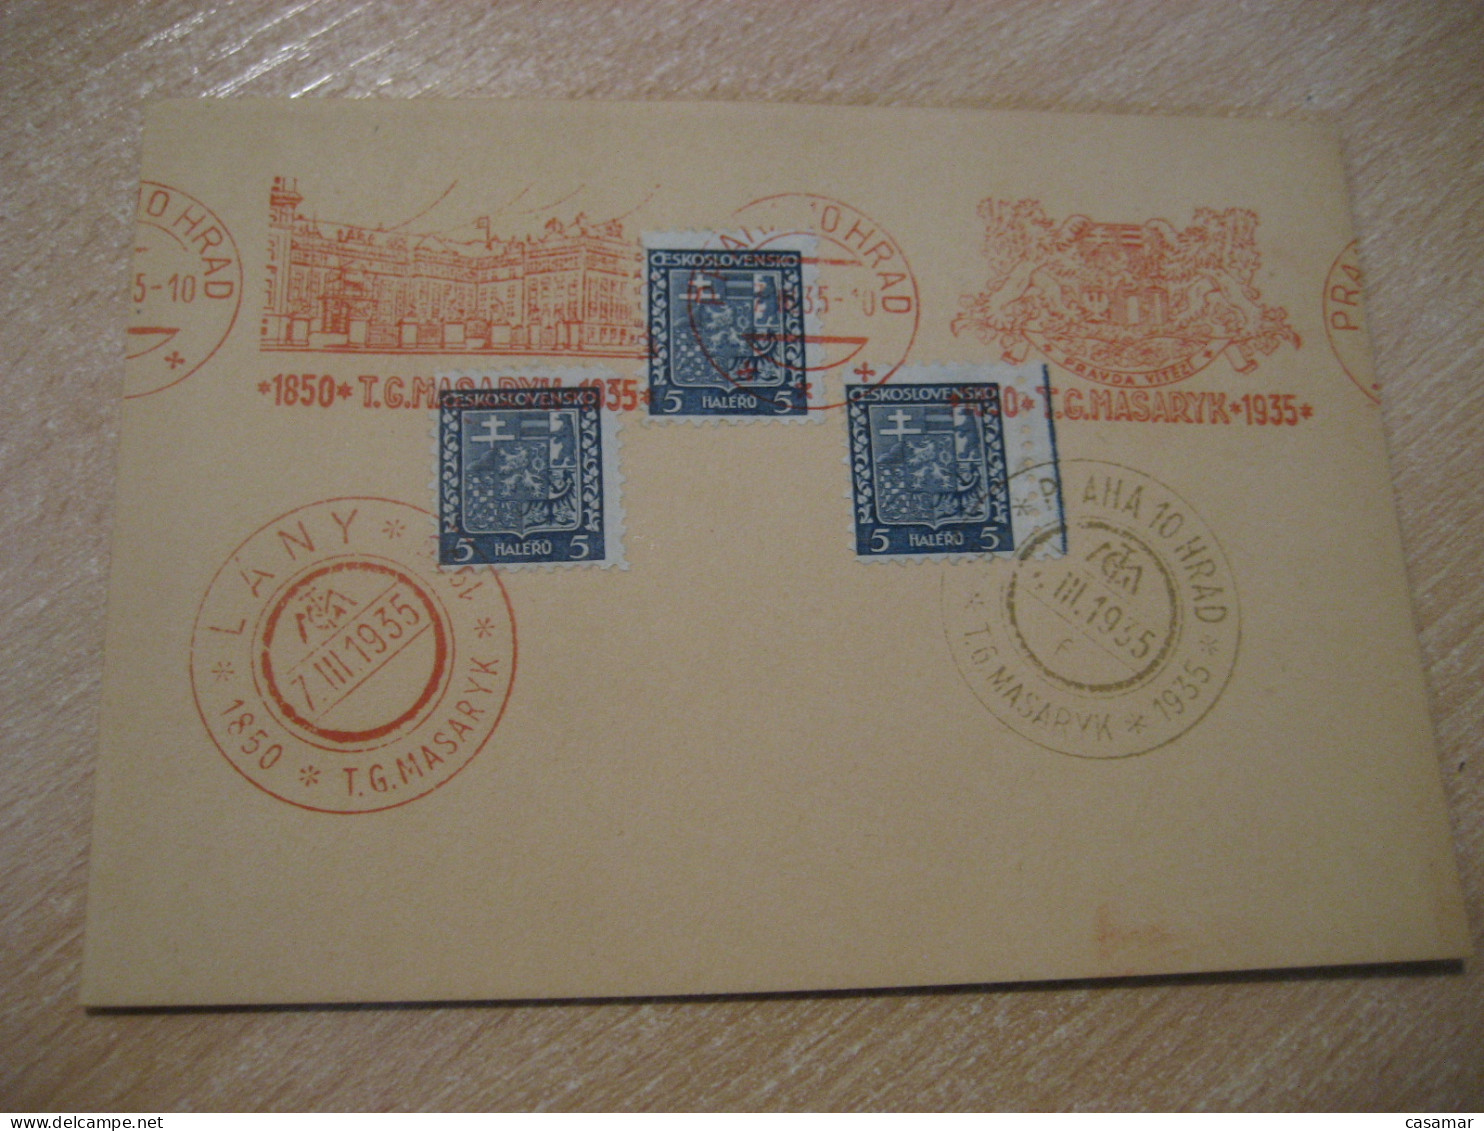 PRAGA 1935 Lany T. G. Masaryk 1850 1935 Meter Mail Cancel Card CZECHOSLOVAKIA - Brieven En Documenten